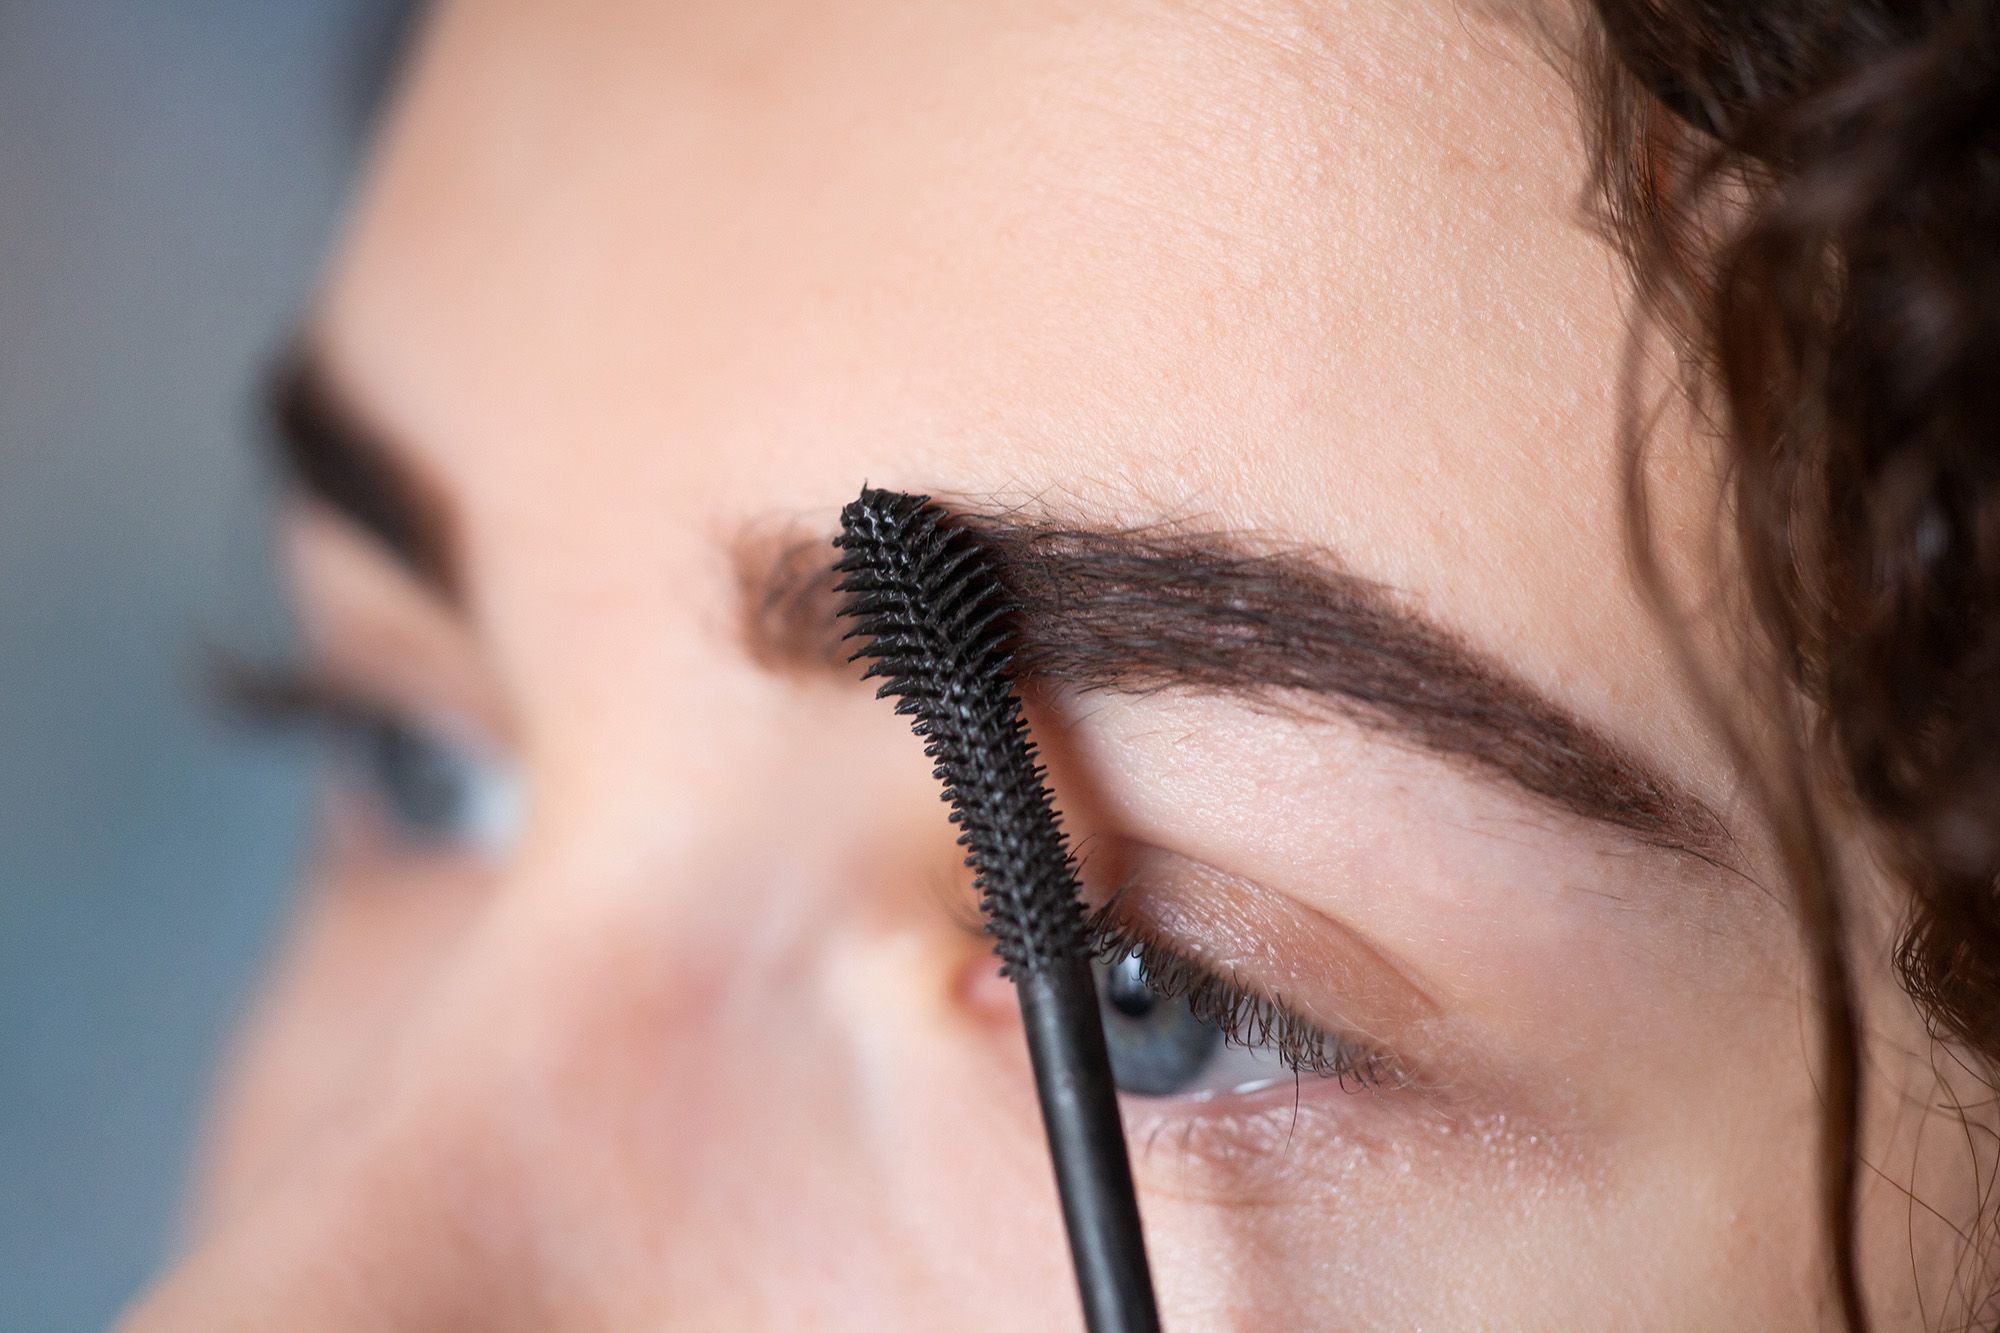 How to use an eyebrow tint kit